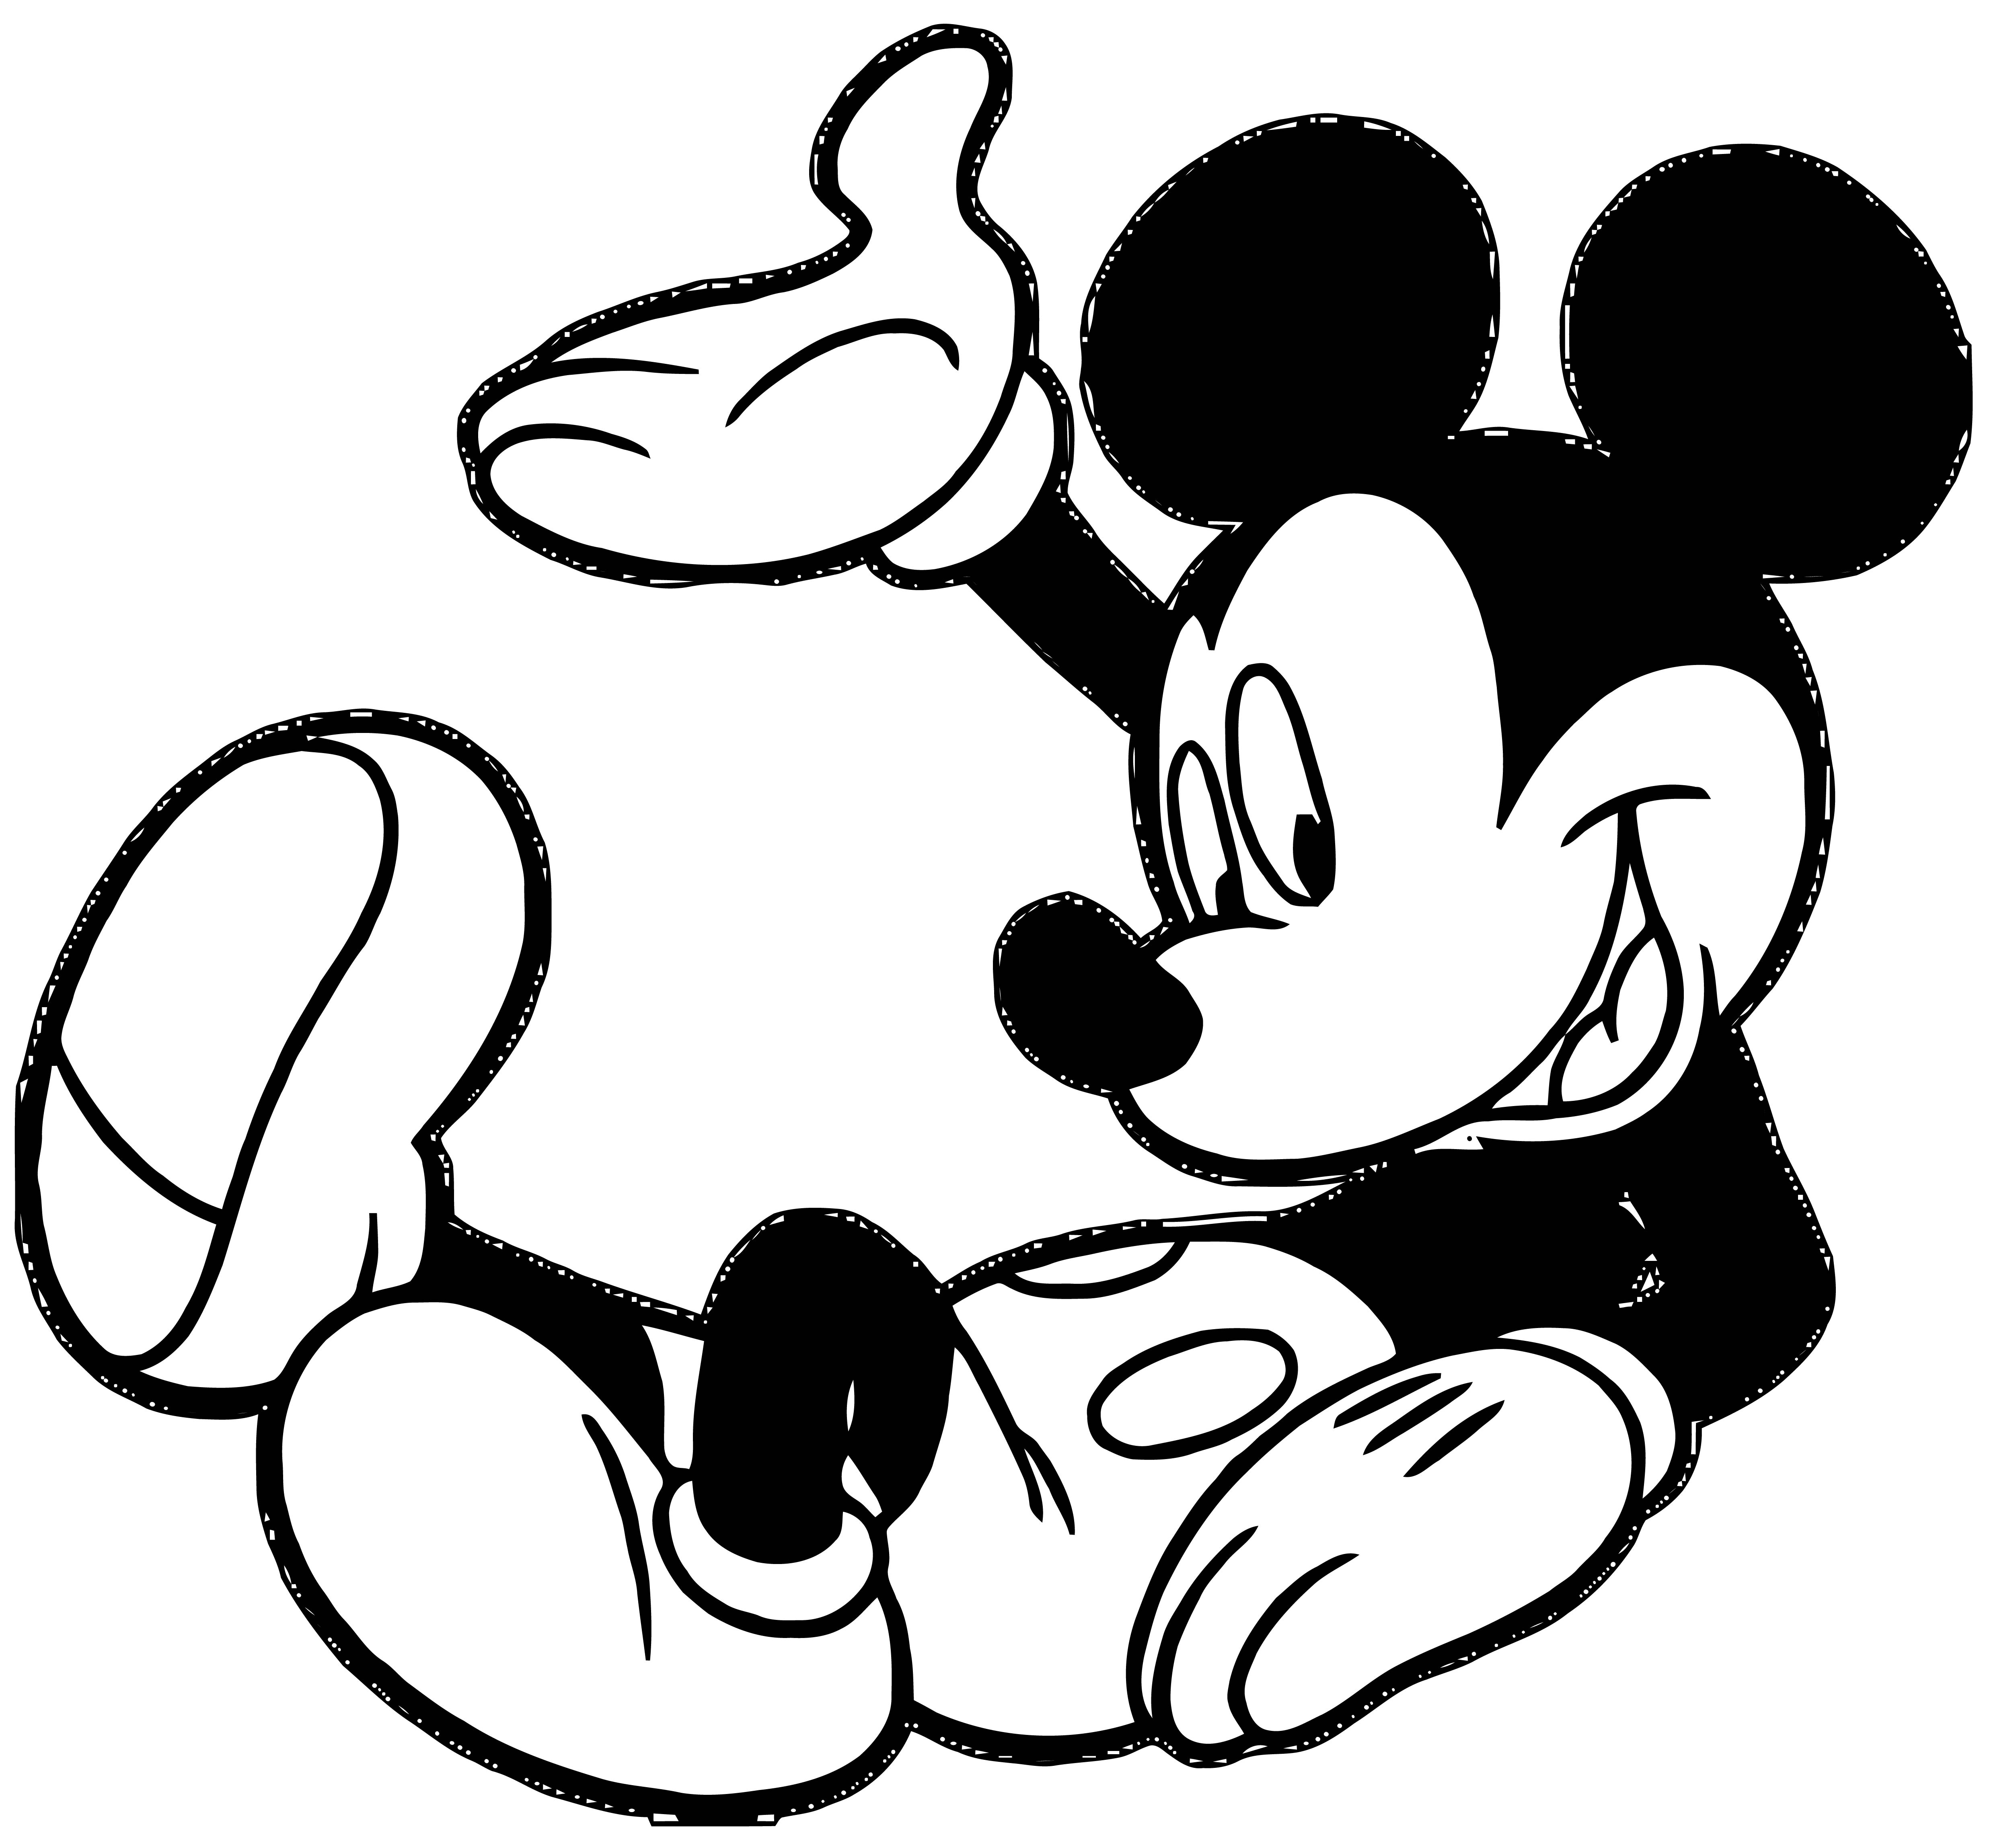 Mickey Mouse Cartoon Coloring Page Wecoloringpage 089 | Wecoloringpage.com